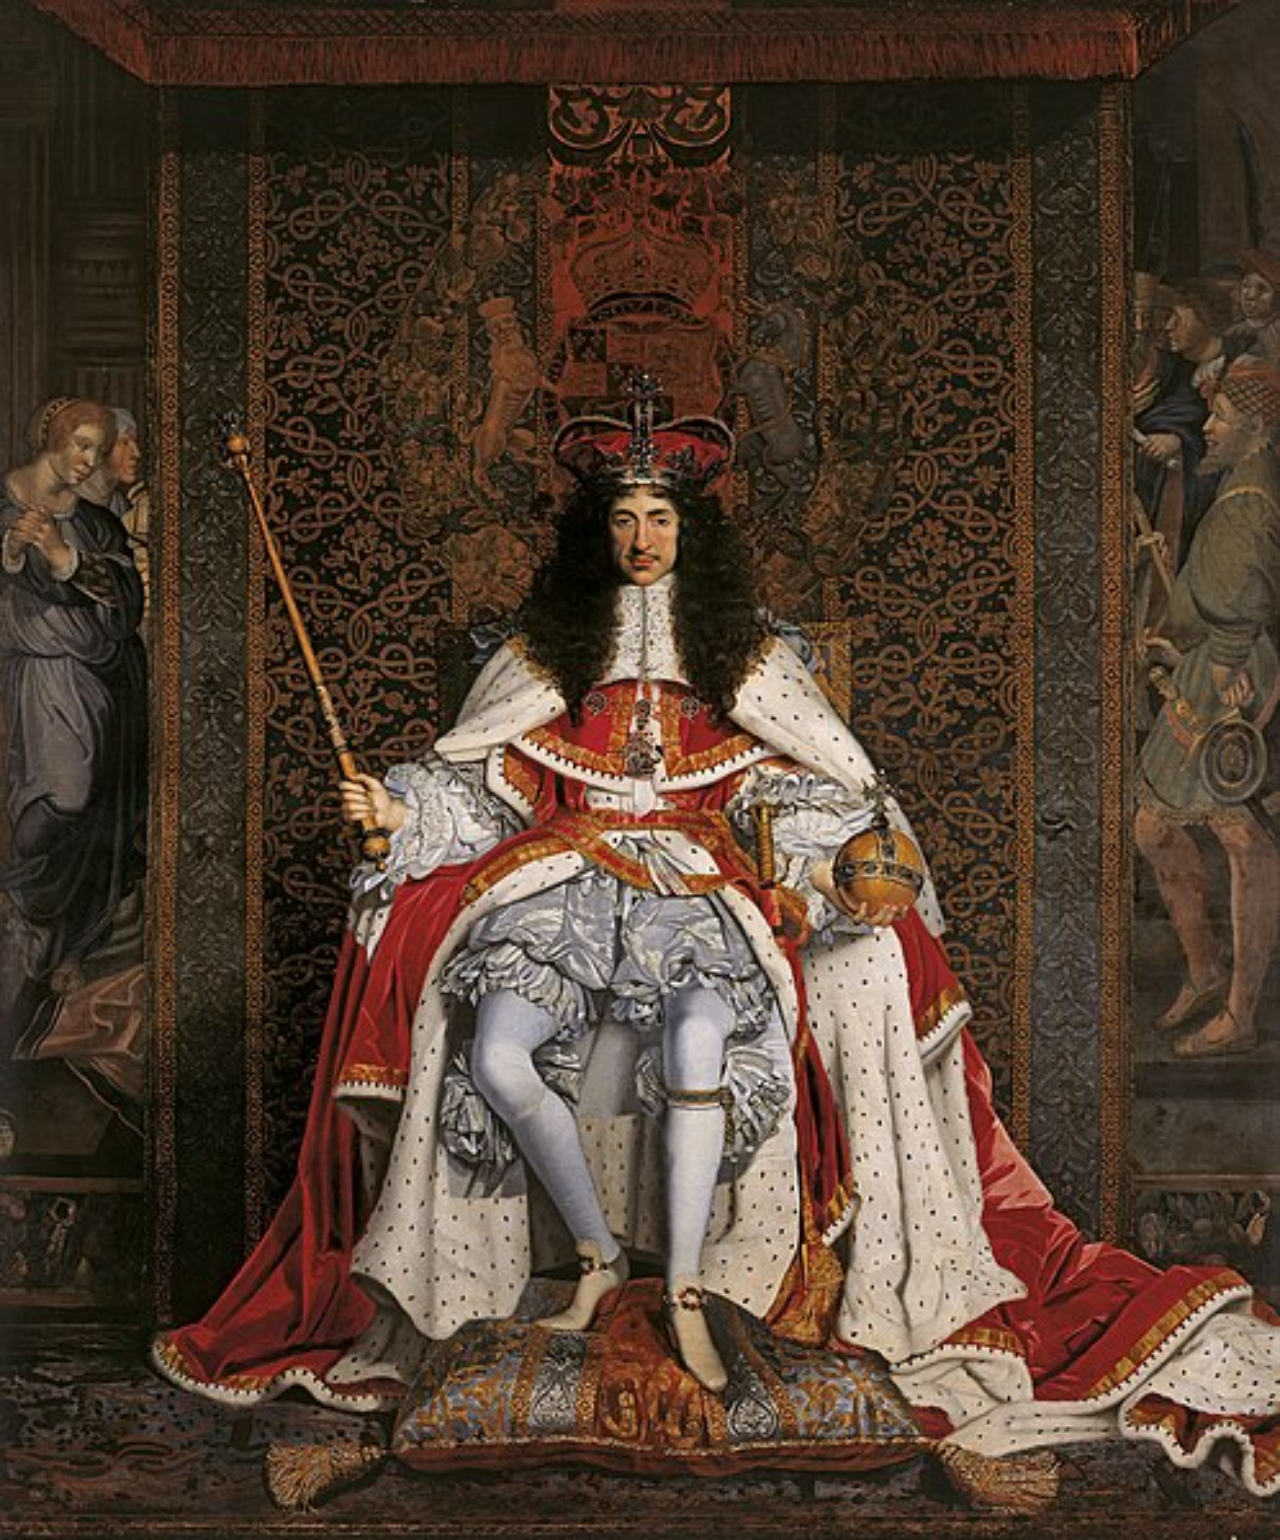 Retrato do rei Charles II